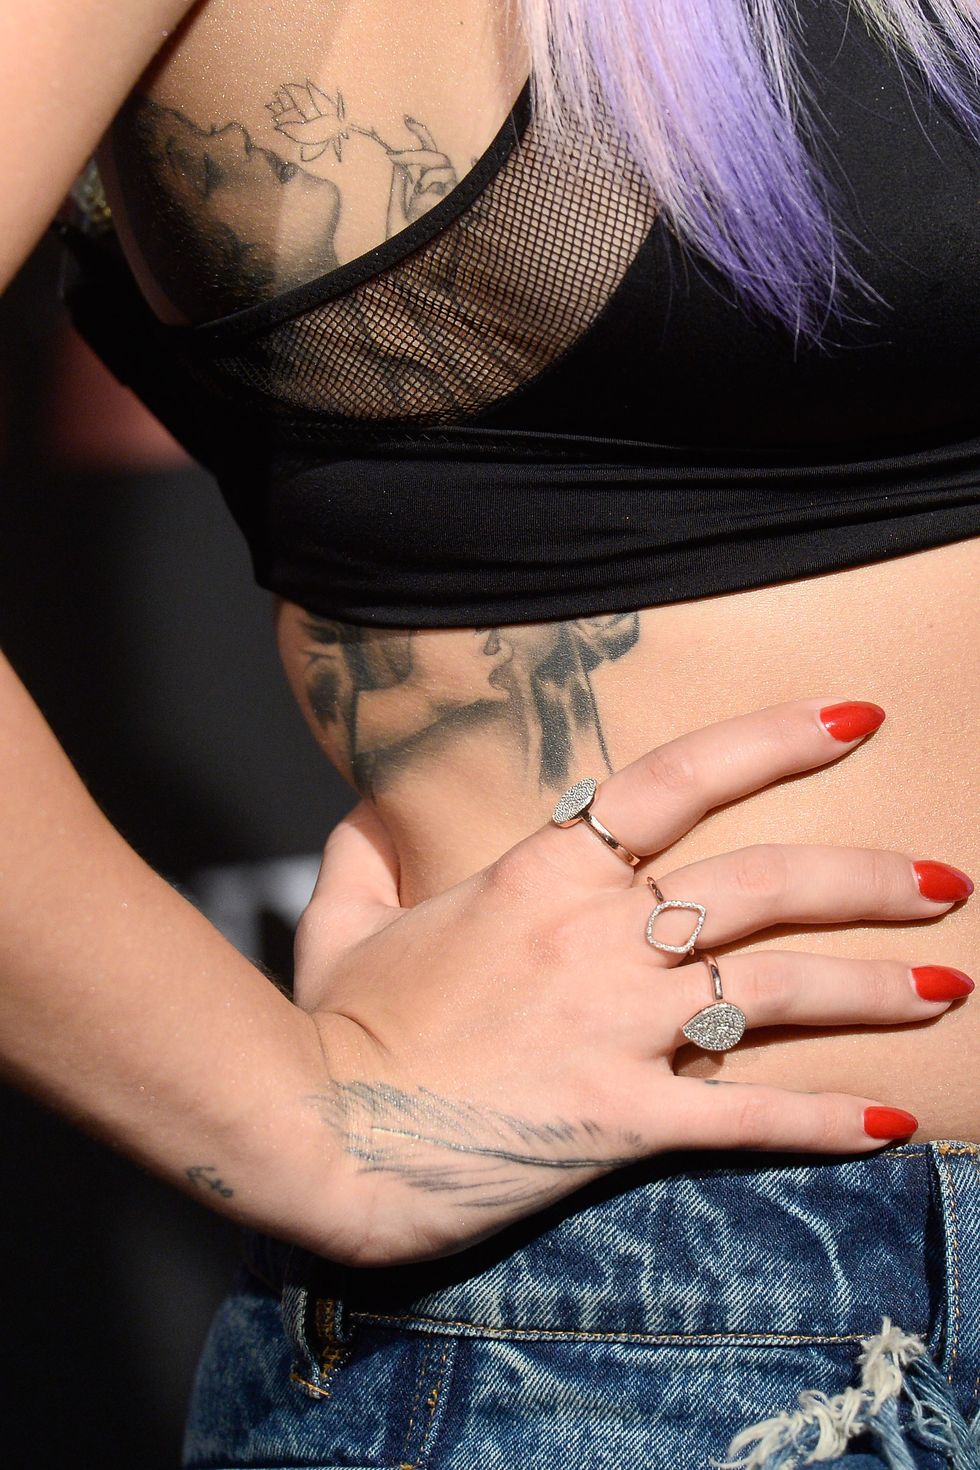 Rita Ora's red nails